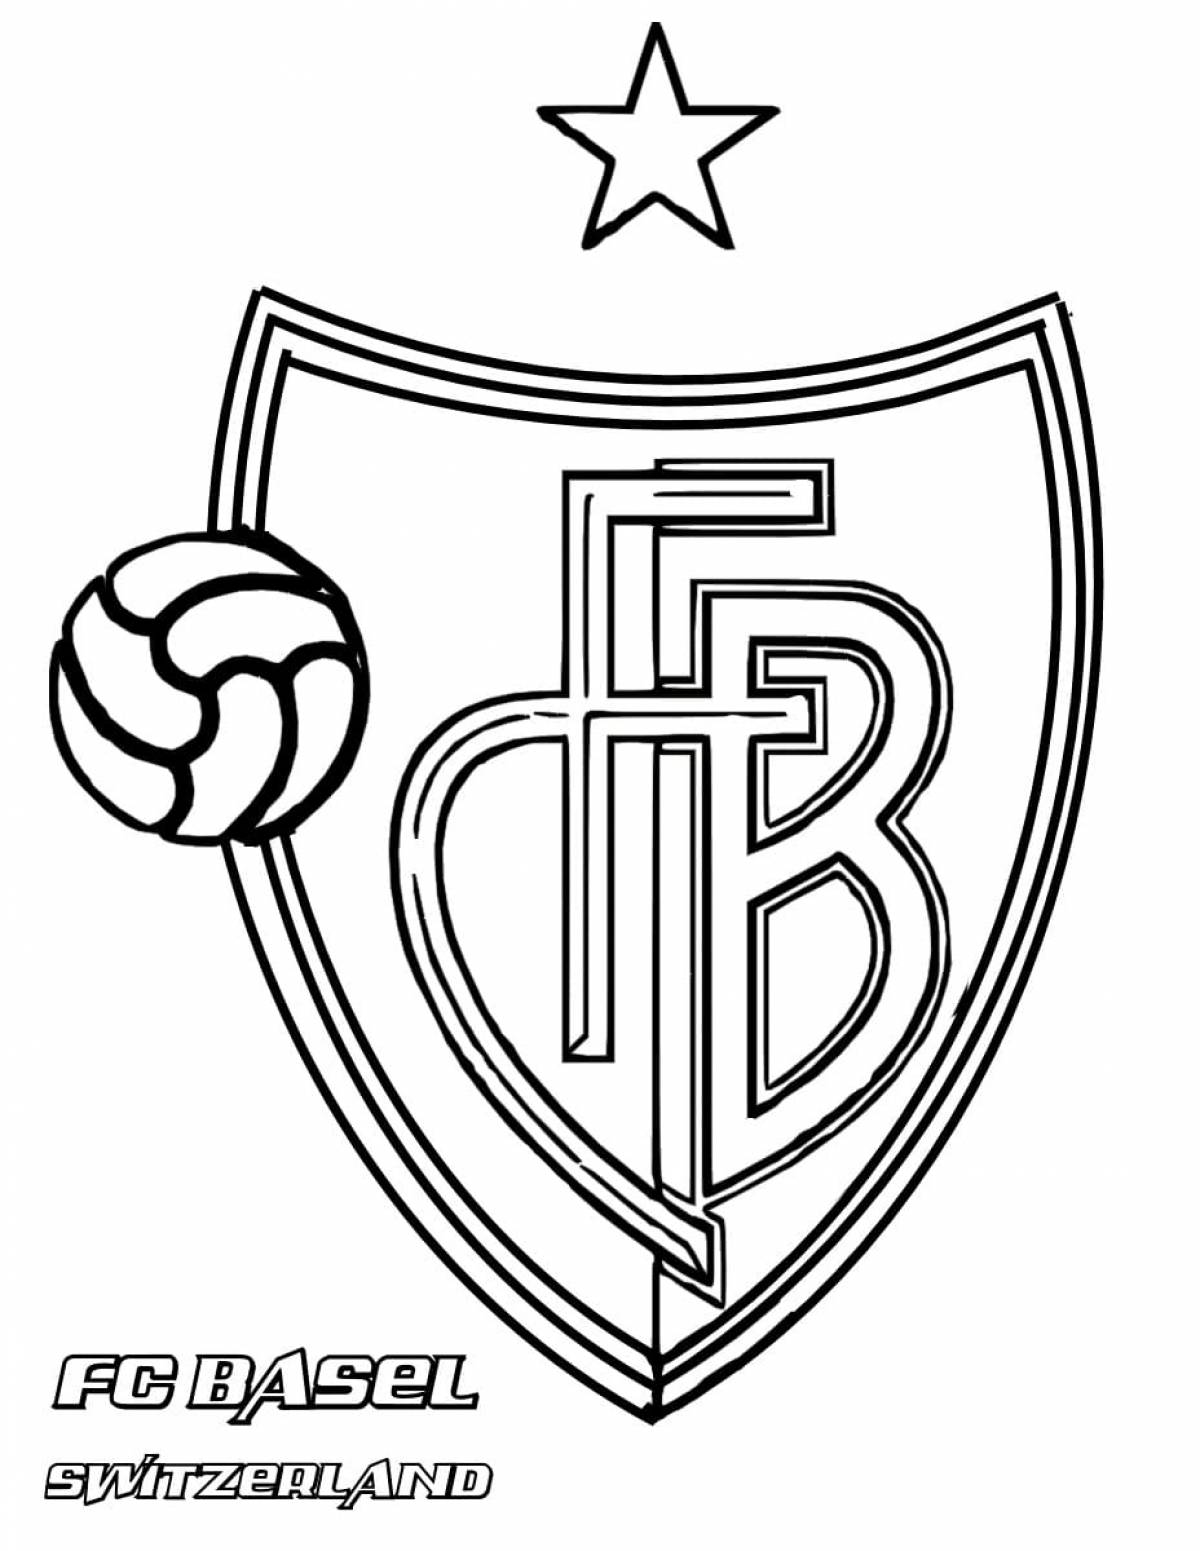 Barcelona emblem #2